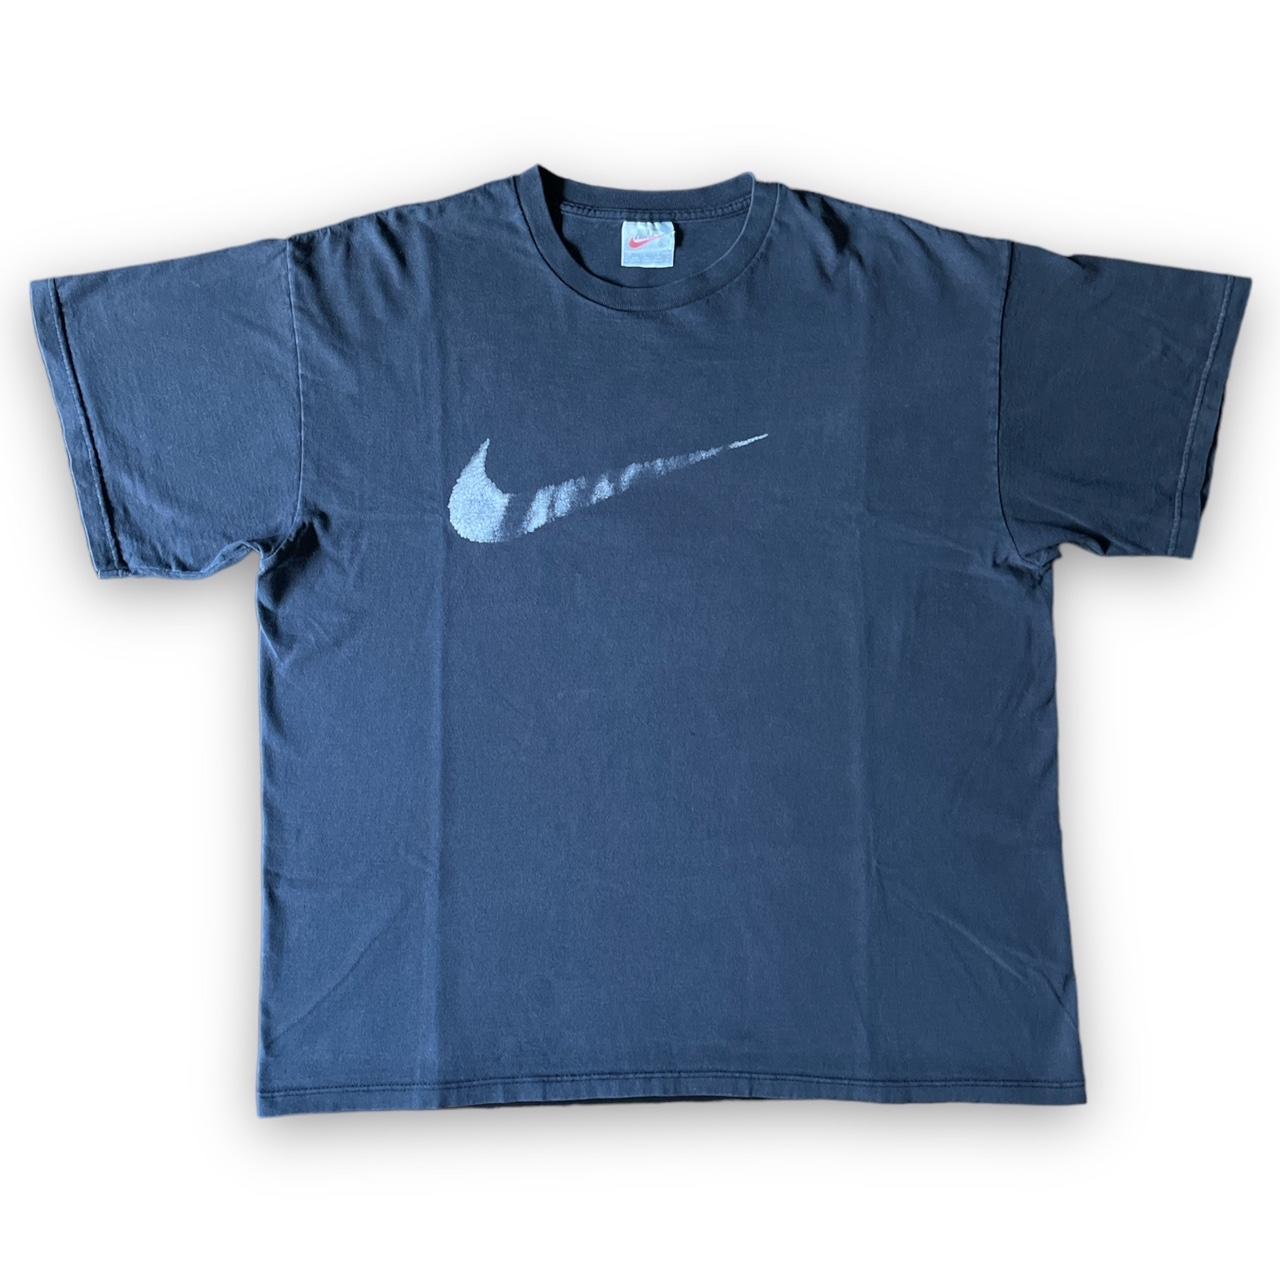 Vintage 90s Nike Big Swoosh T-Shirt, Black, Size XL 